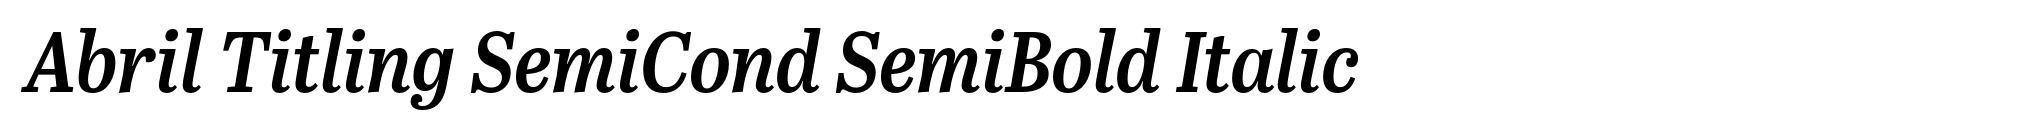 Abril Titling SemiCond SemiBold Italic image